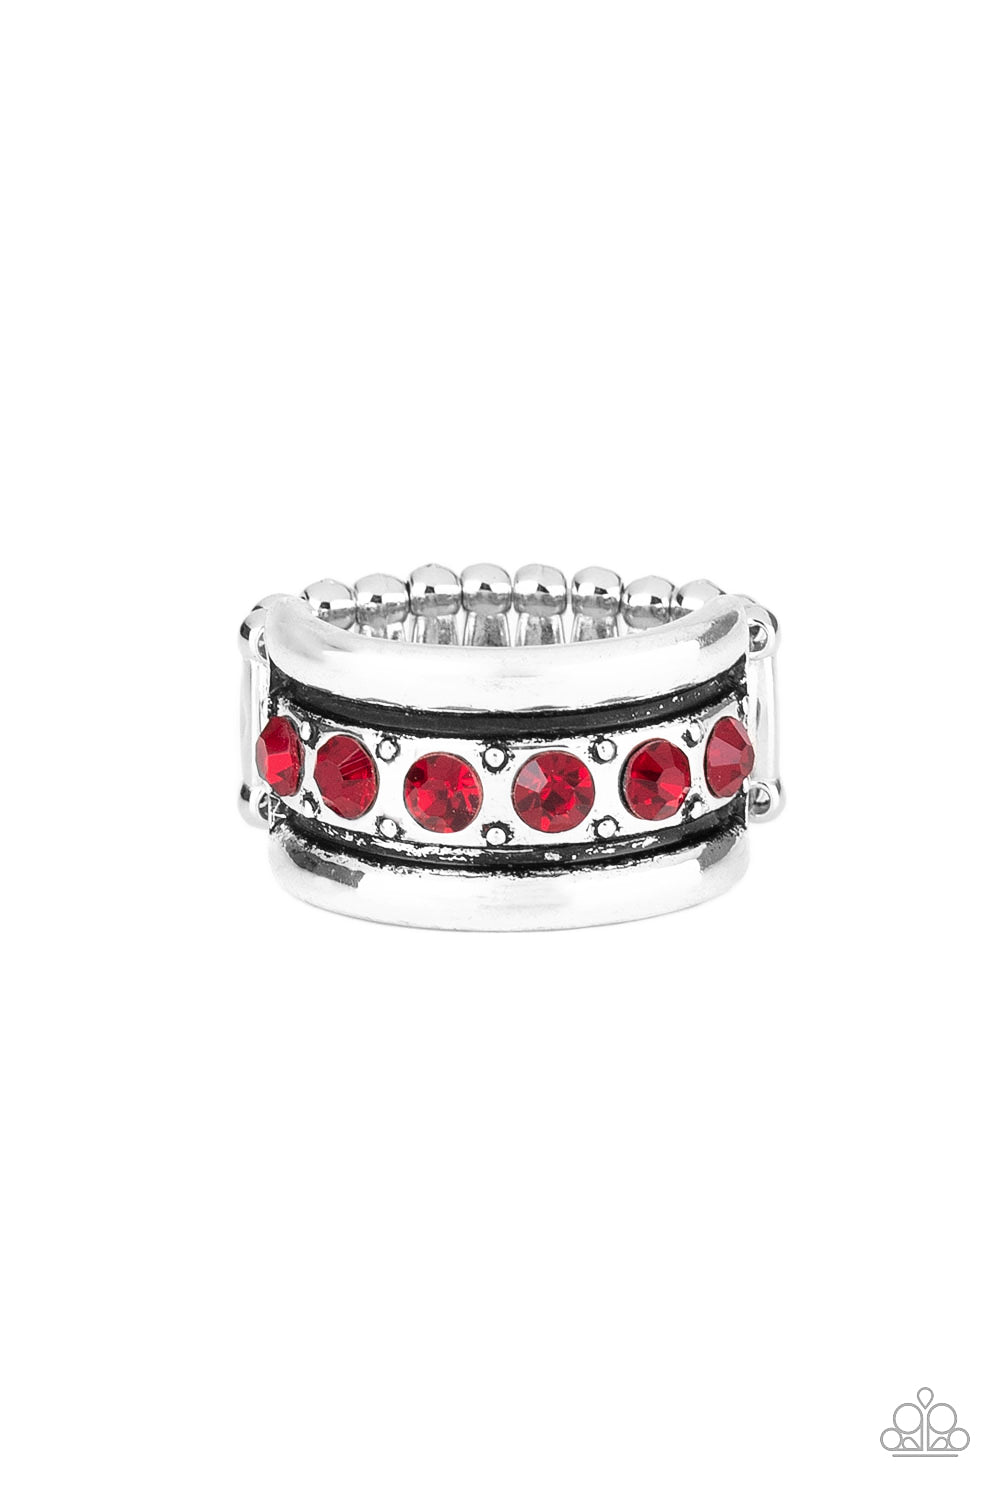 five-dollar-jewelry-dauntless-shine-red-paparazzi-accessories